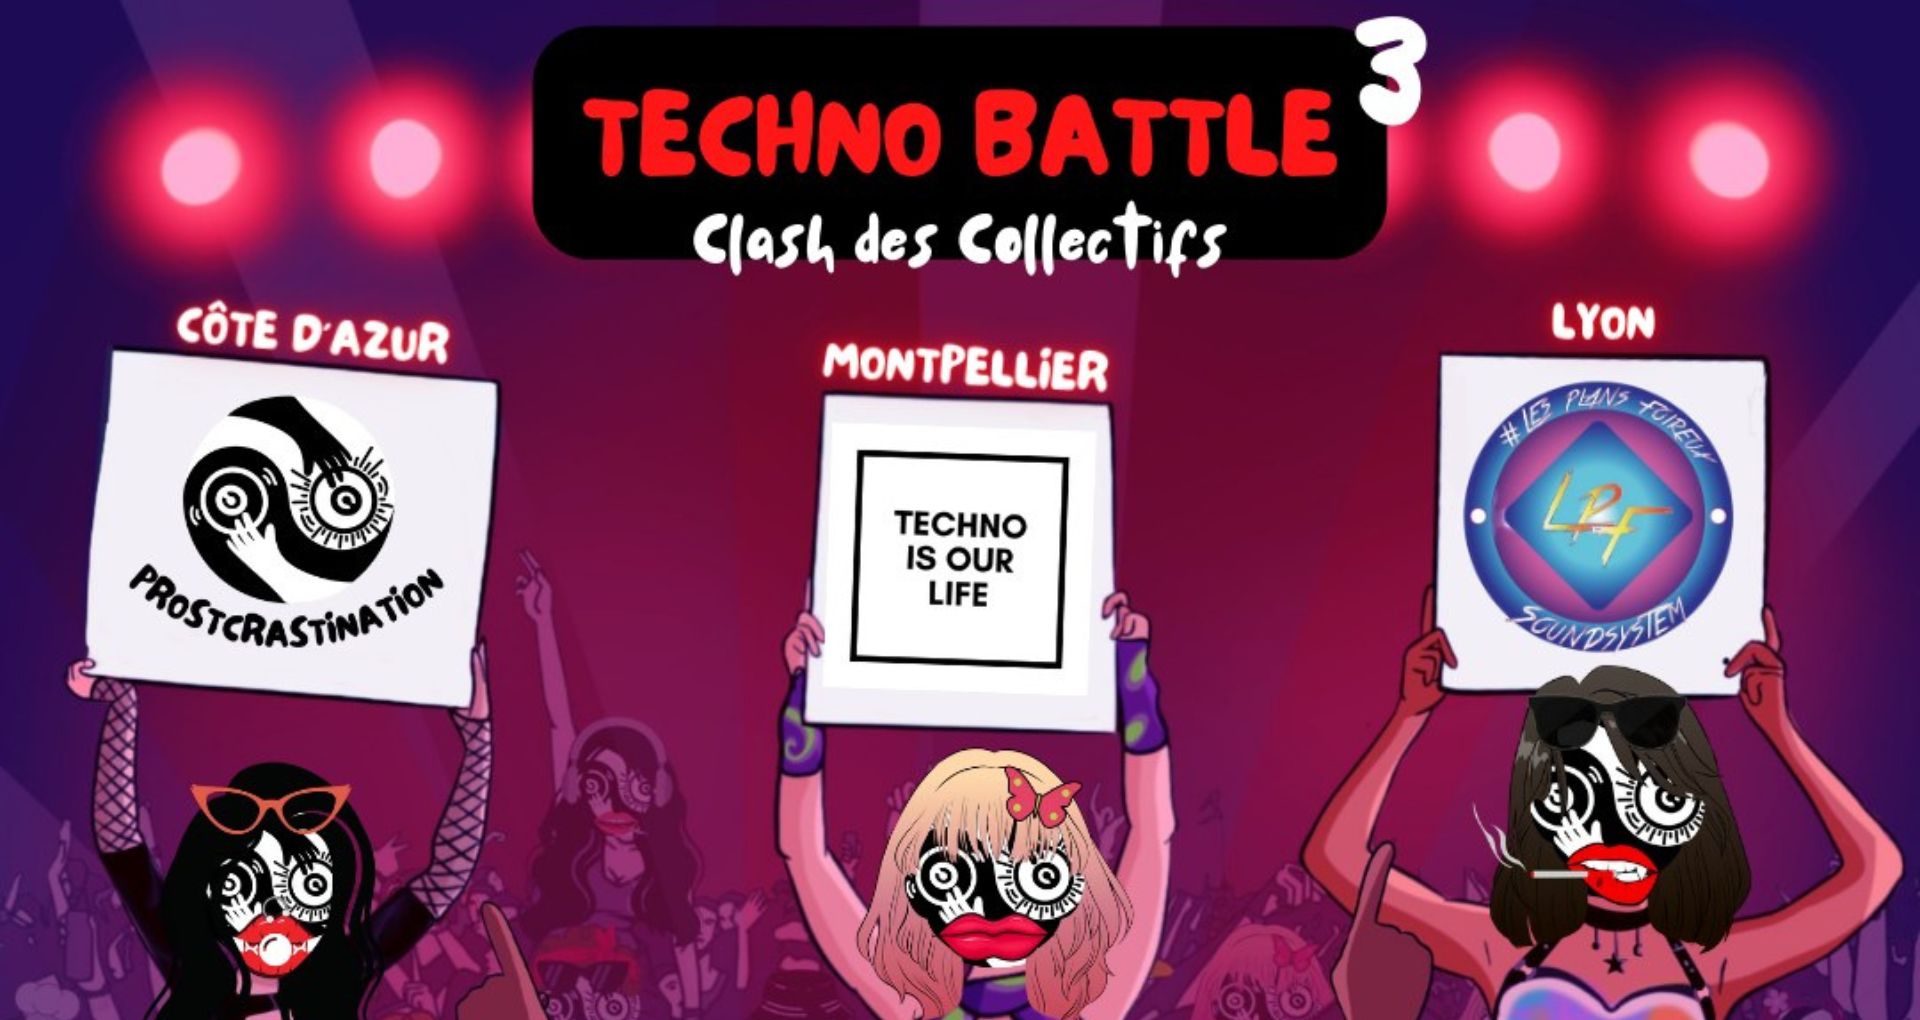 Affiche du Techno Battle Prostcrastination